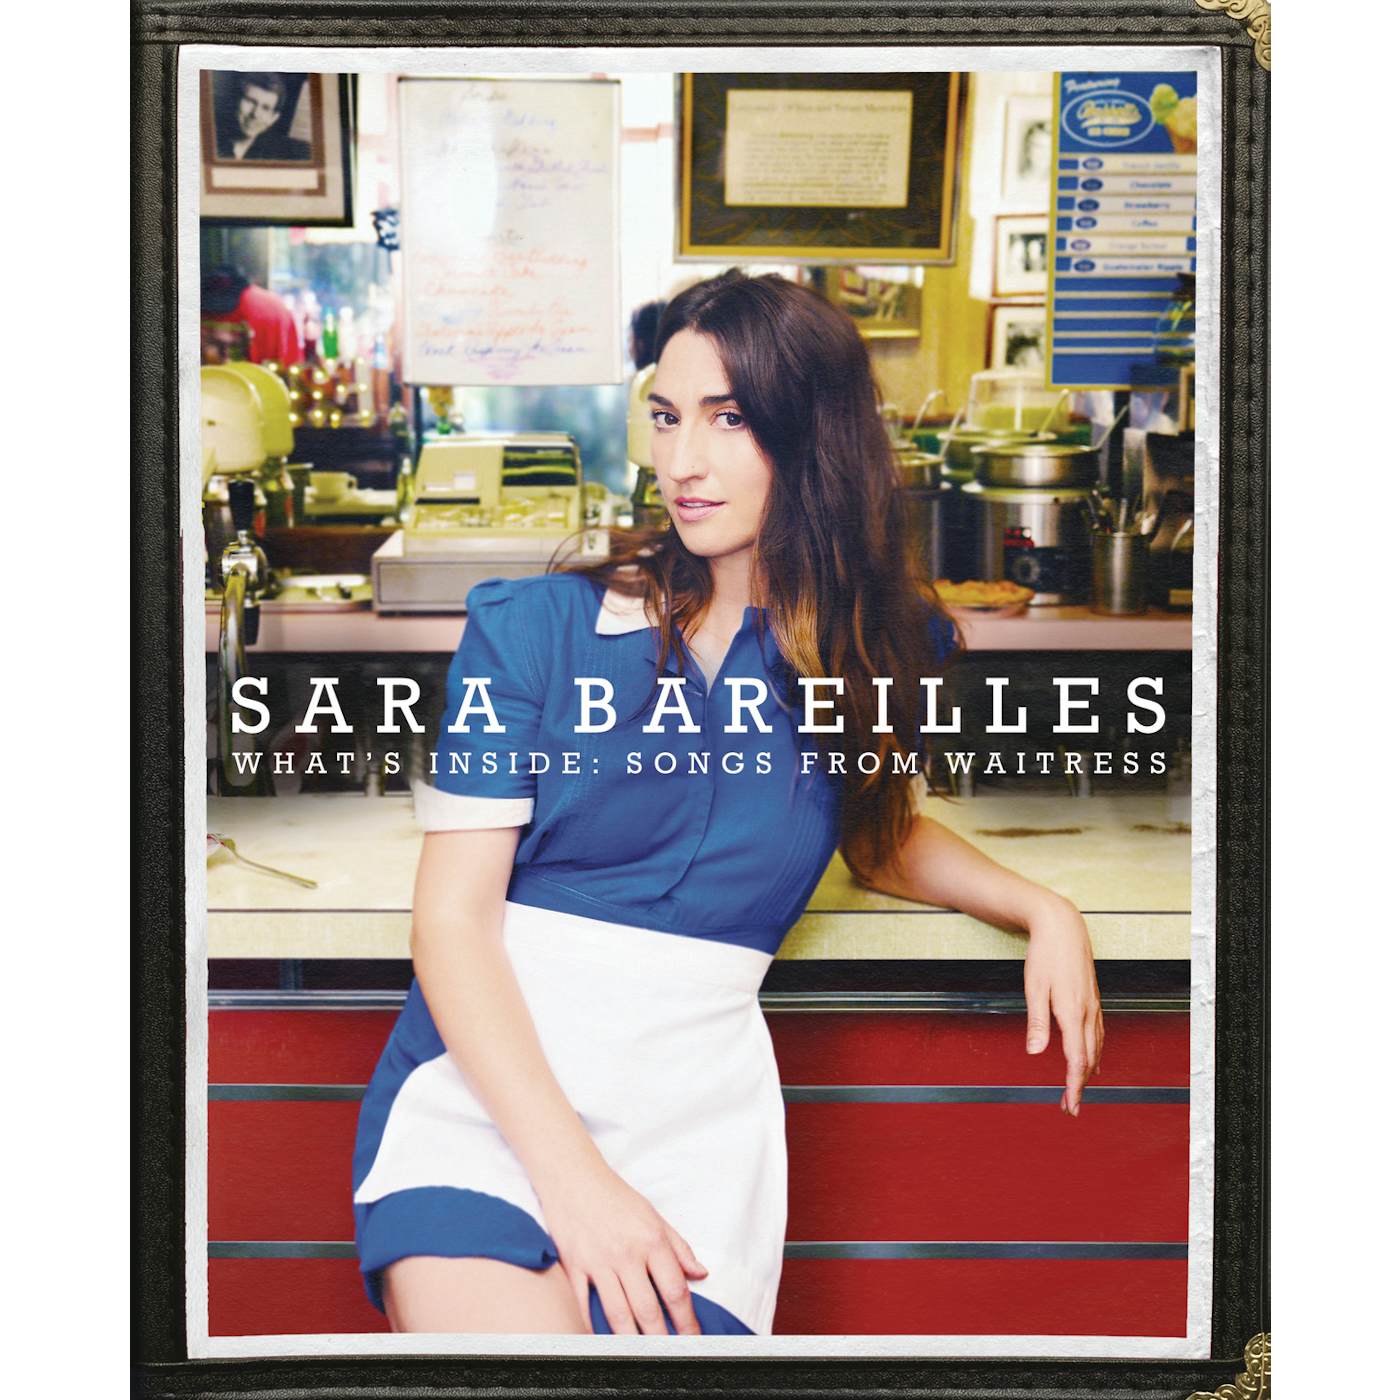 Sara Bareilles WHAT'S INSIDE: SONGS FROM WAITRESS CD